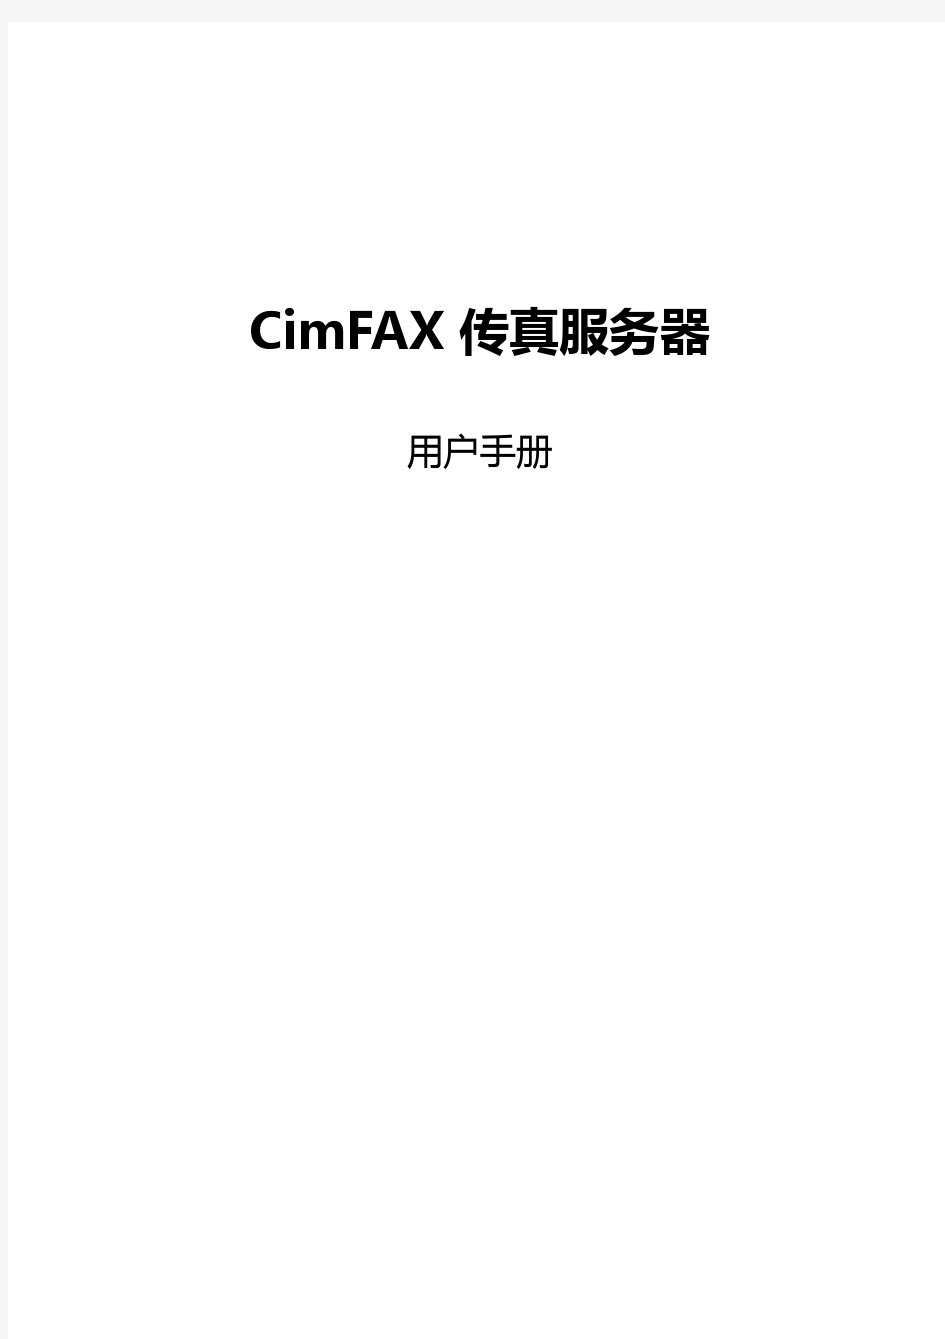 CimFAX_S4105 用户手册